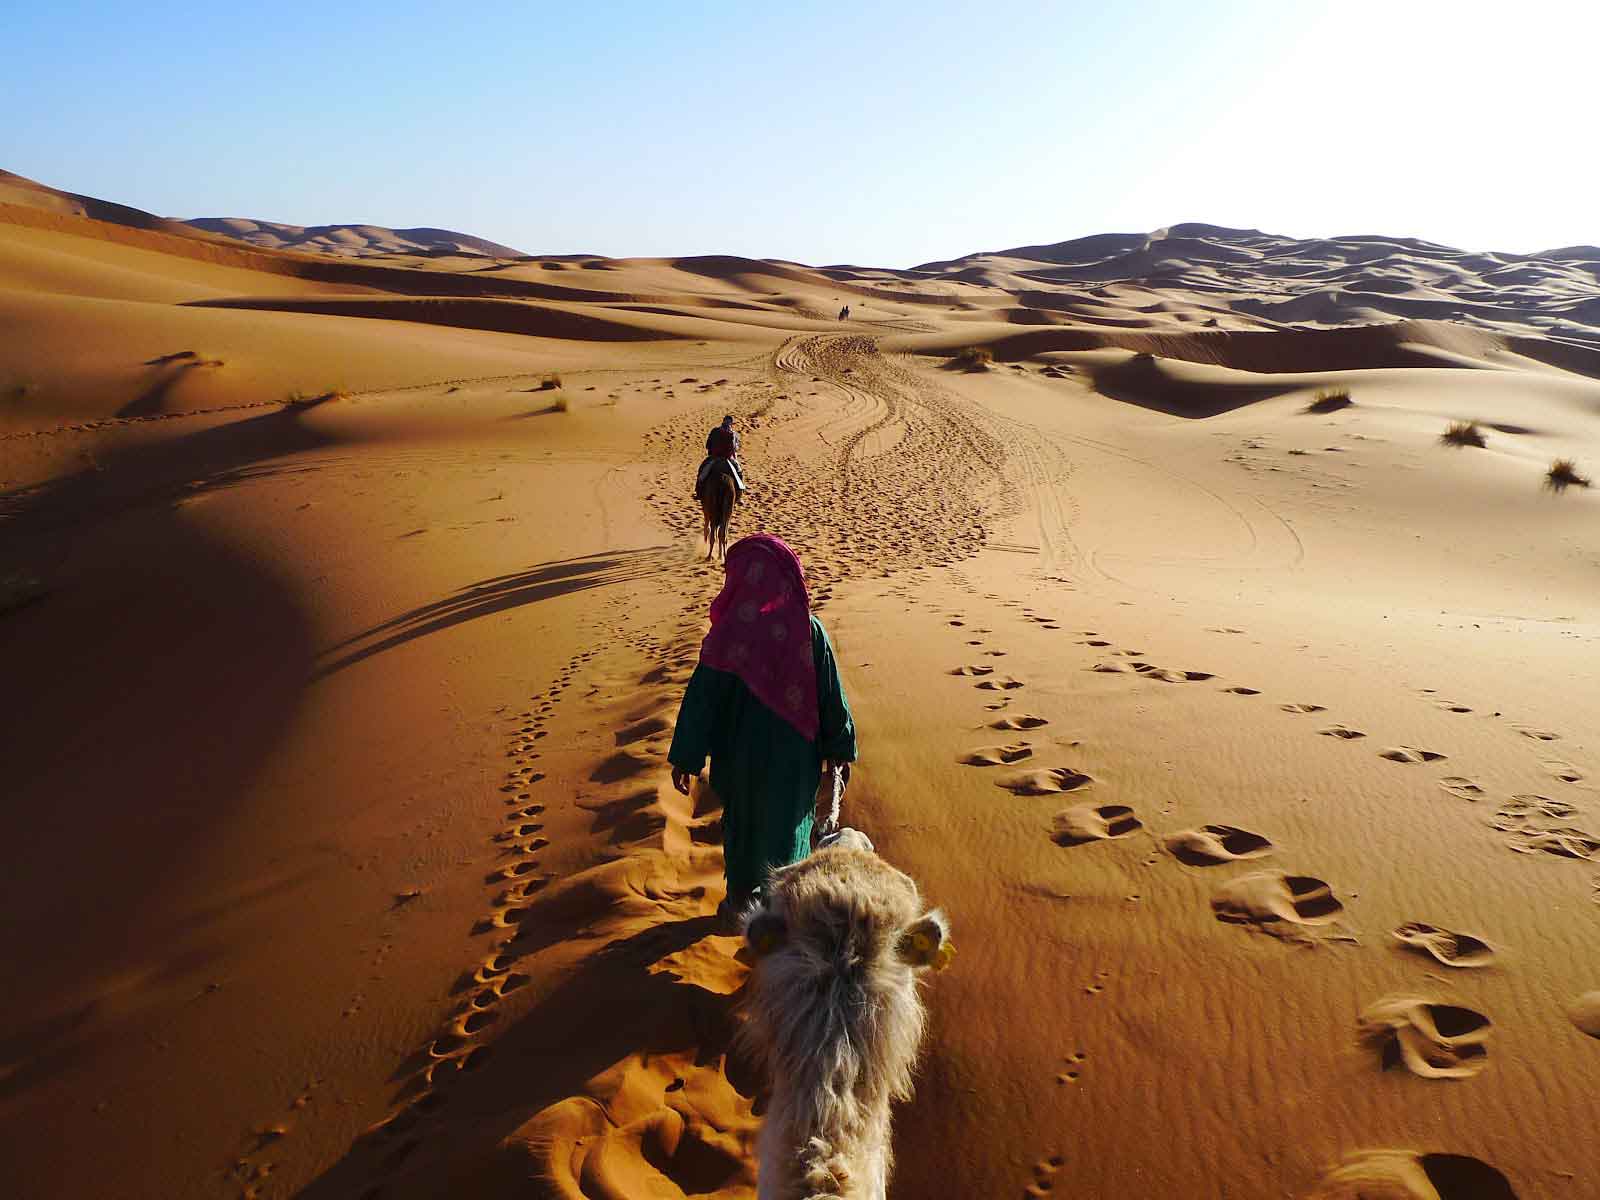 Morocco Easy Travel